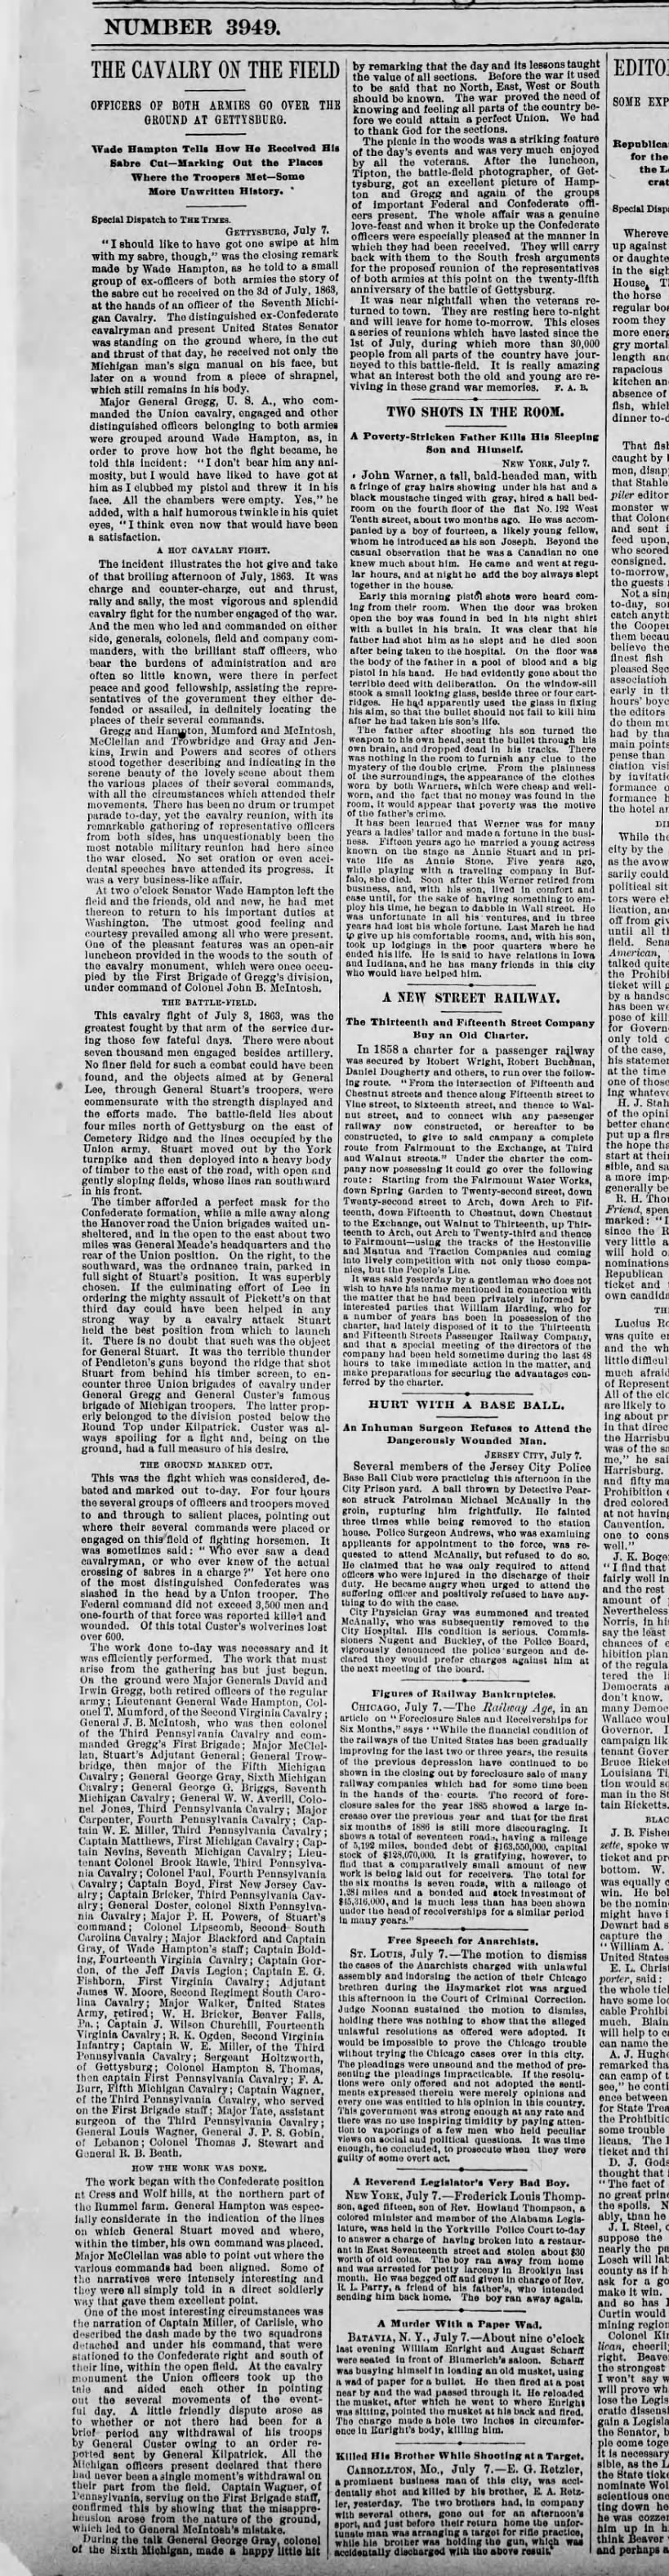 Cavalry reunion at Gettysburg
Phila Times, July 8 1886